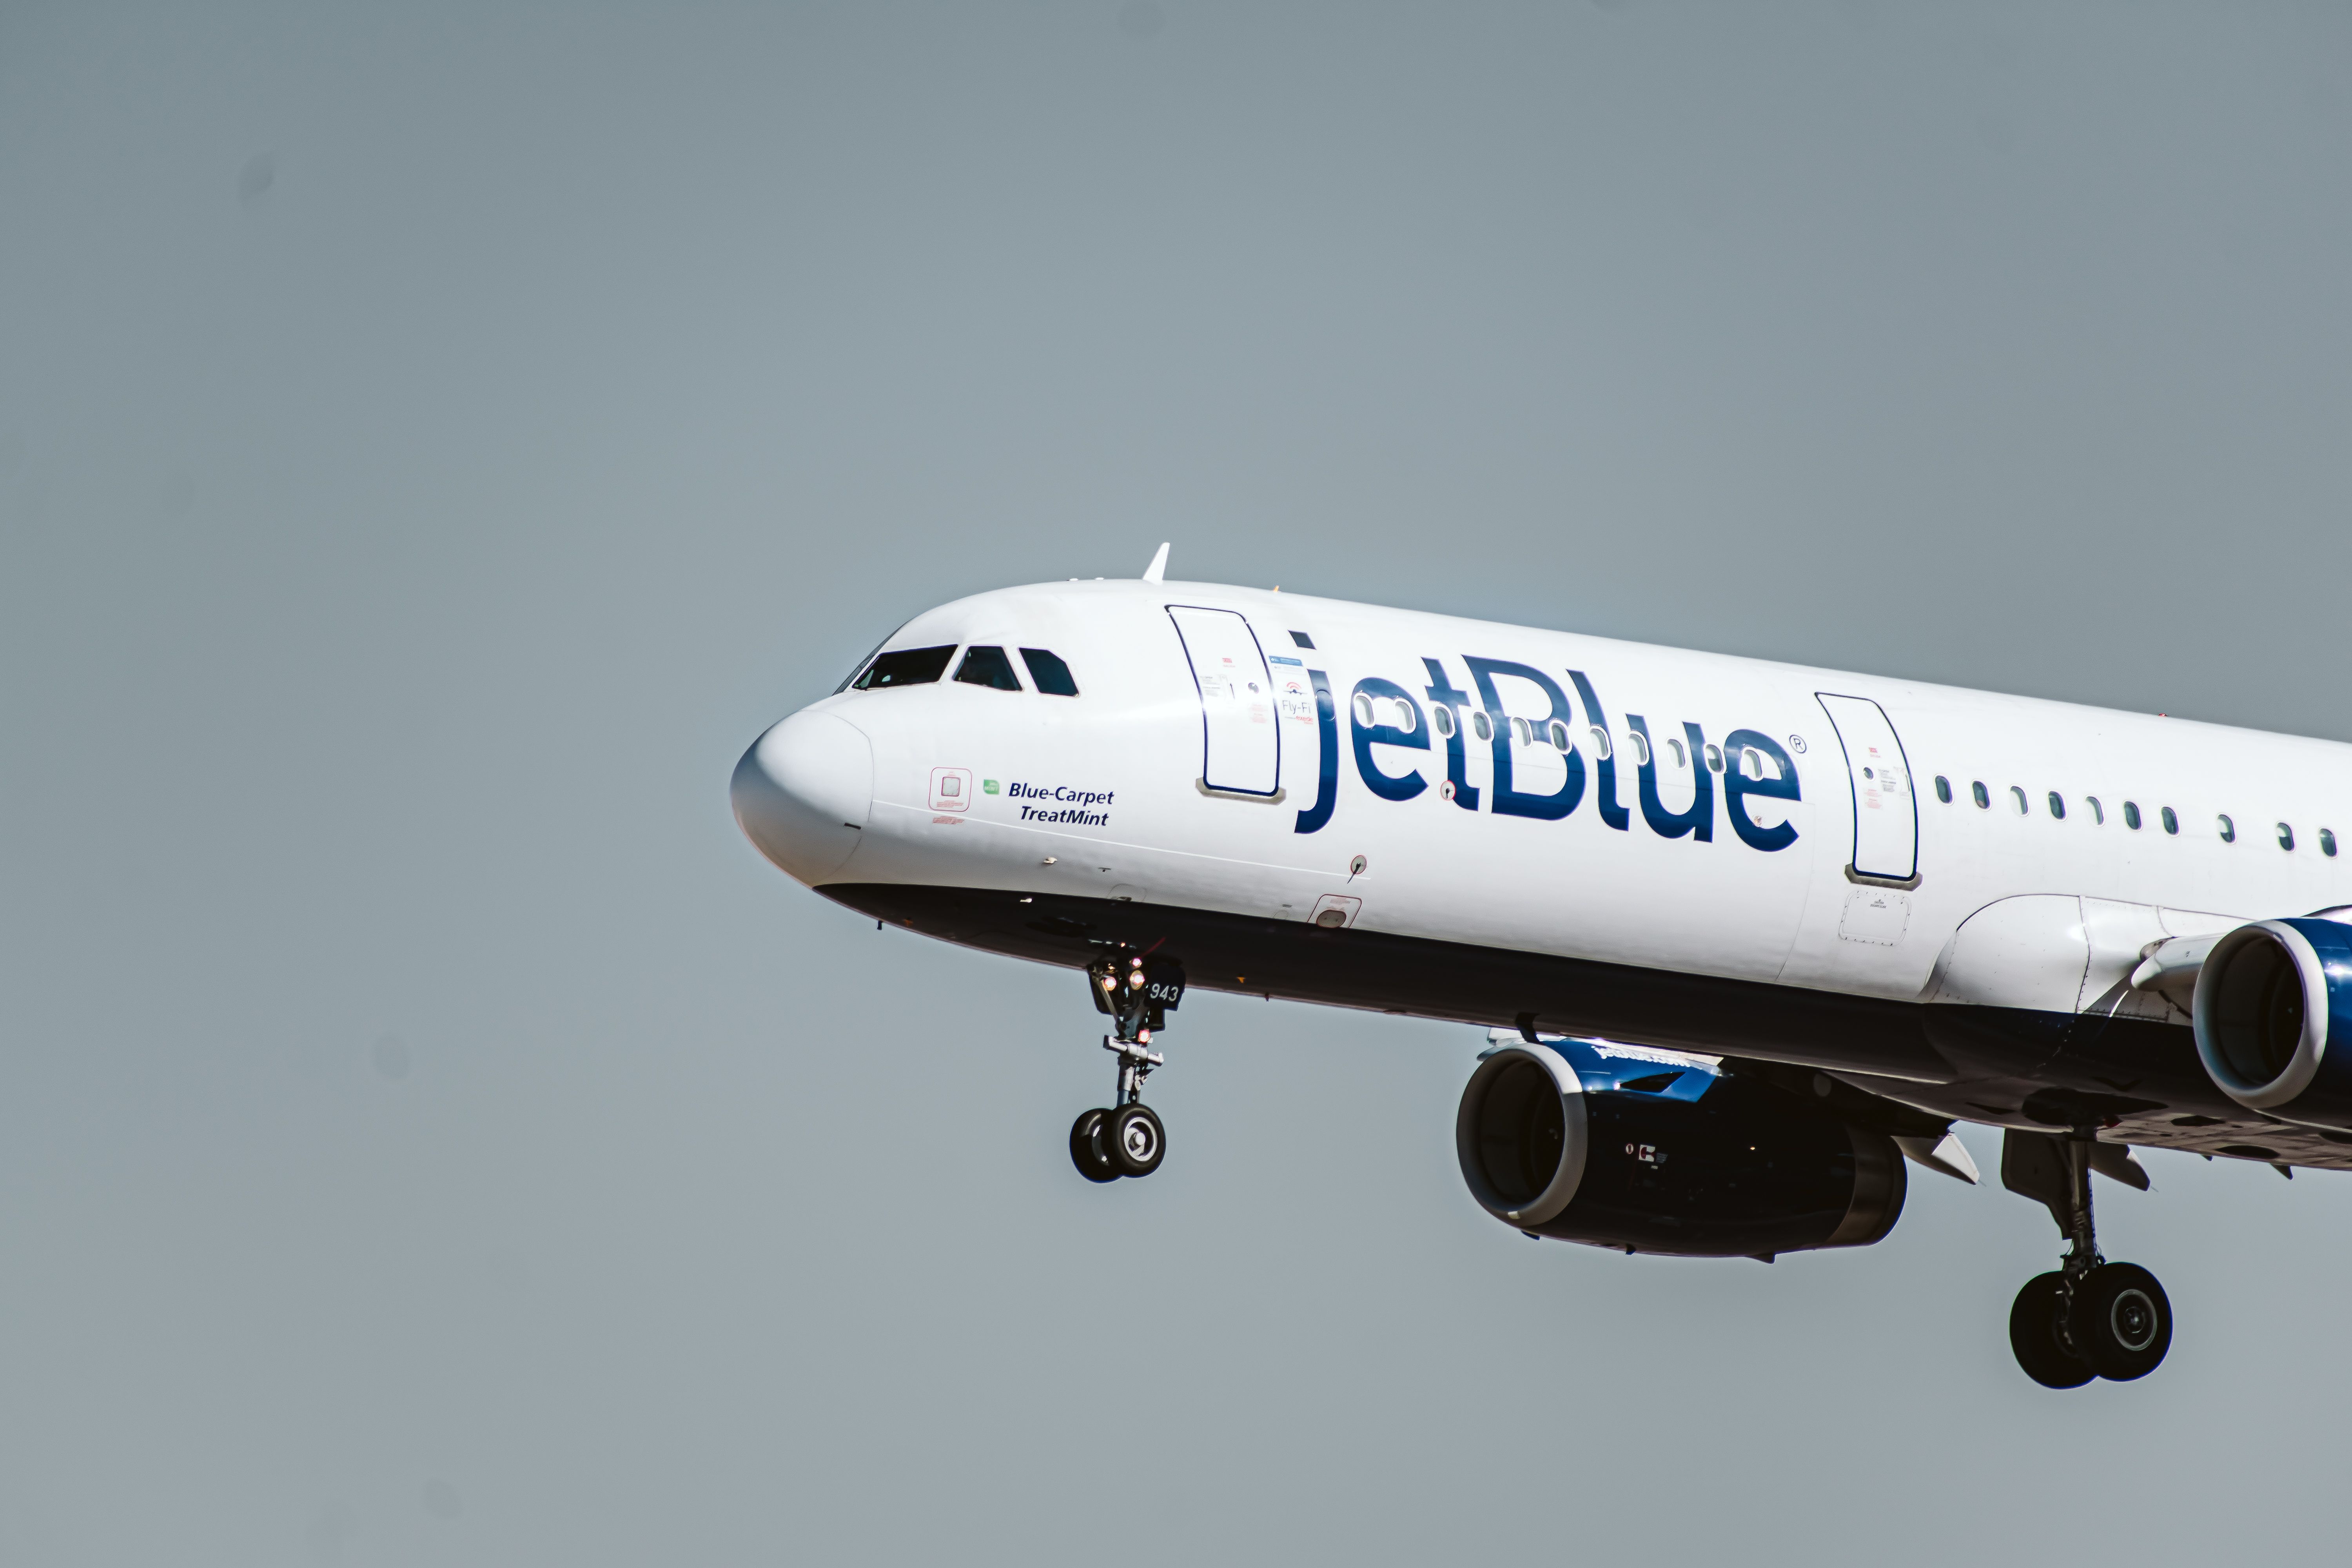 JetBlue AirbusA321 landing at LAS